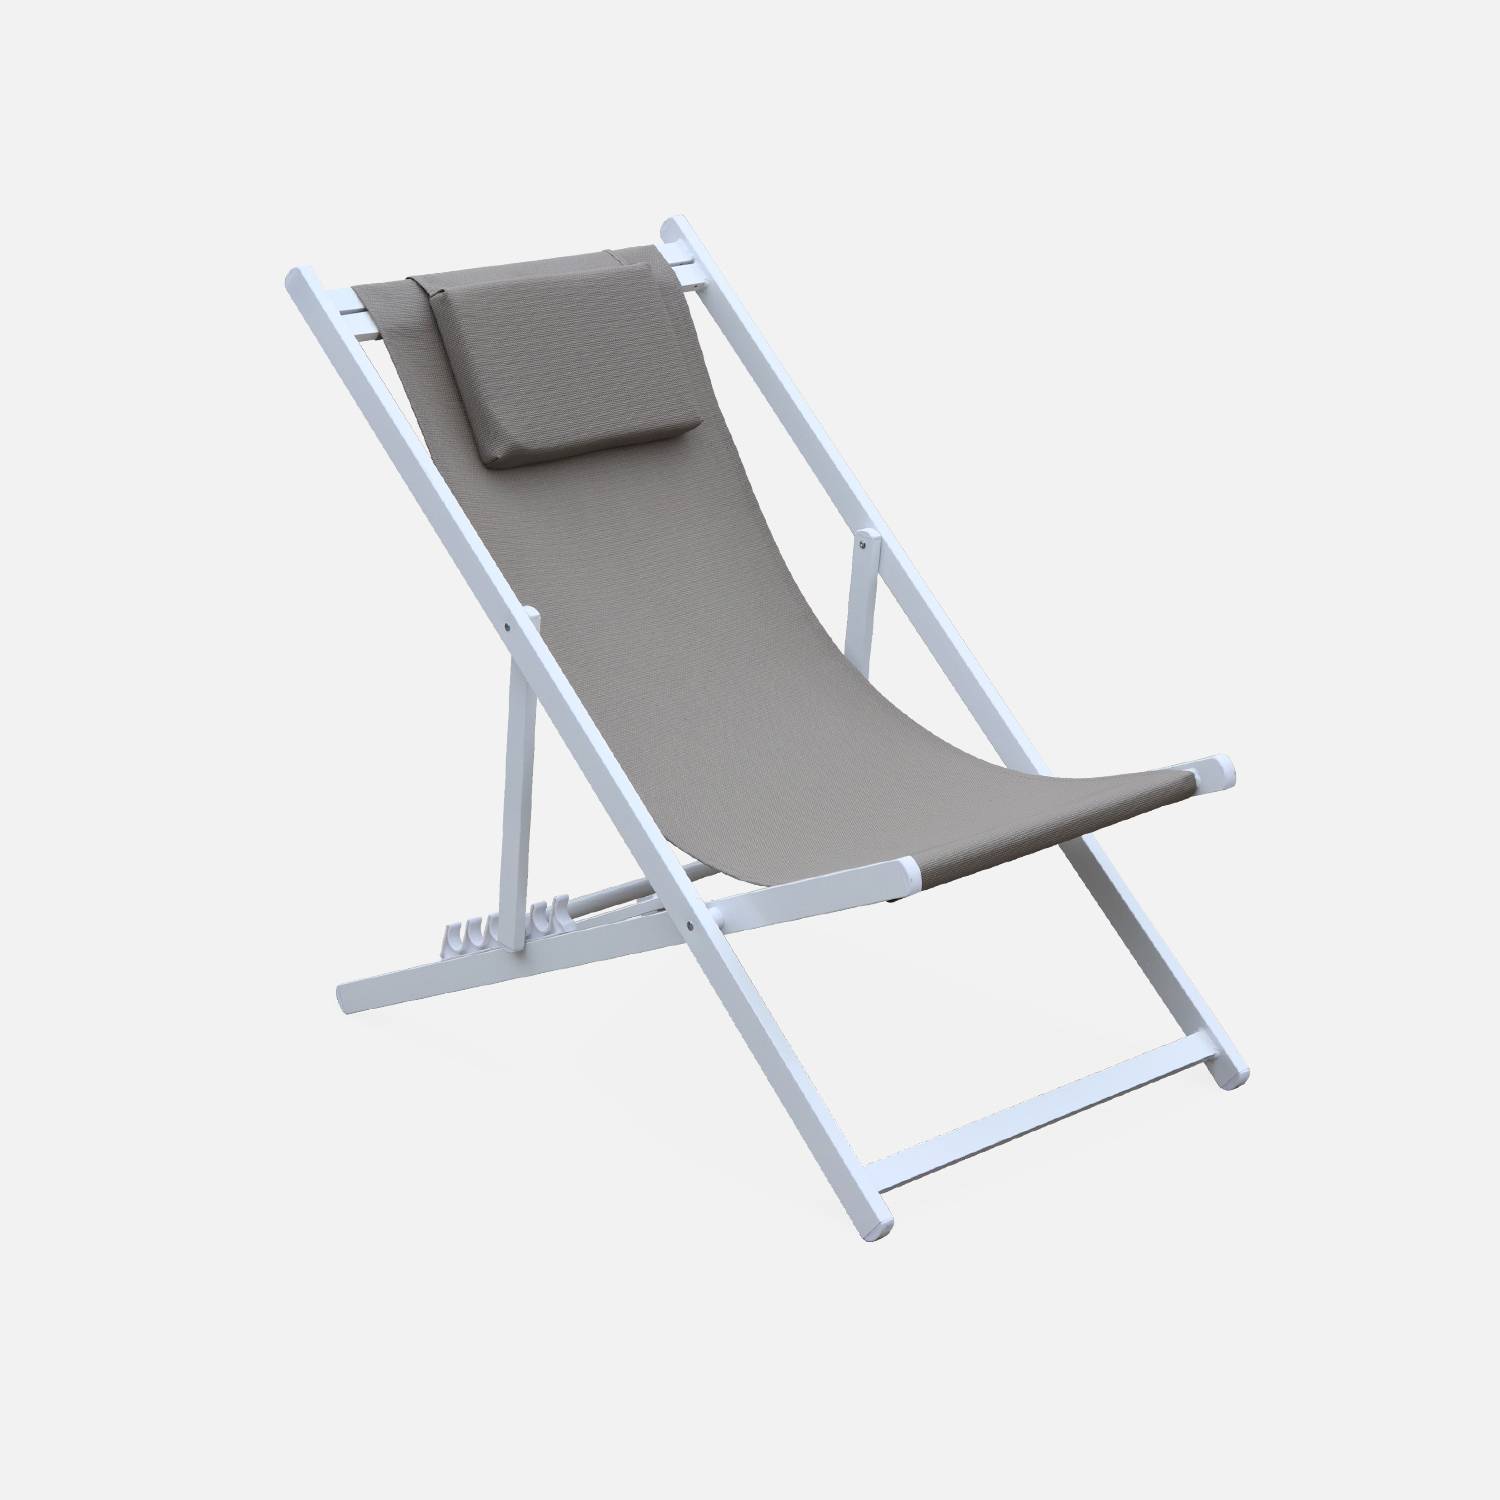 Juego de 2 sillas para tomar sol - Gaia taupe - Aluminio blanco y textileno taupe con reposacabezas.,sweeek,Photo3